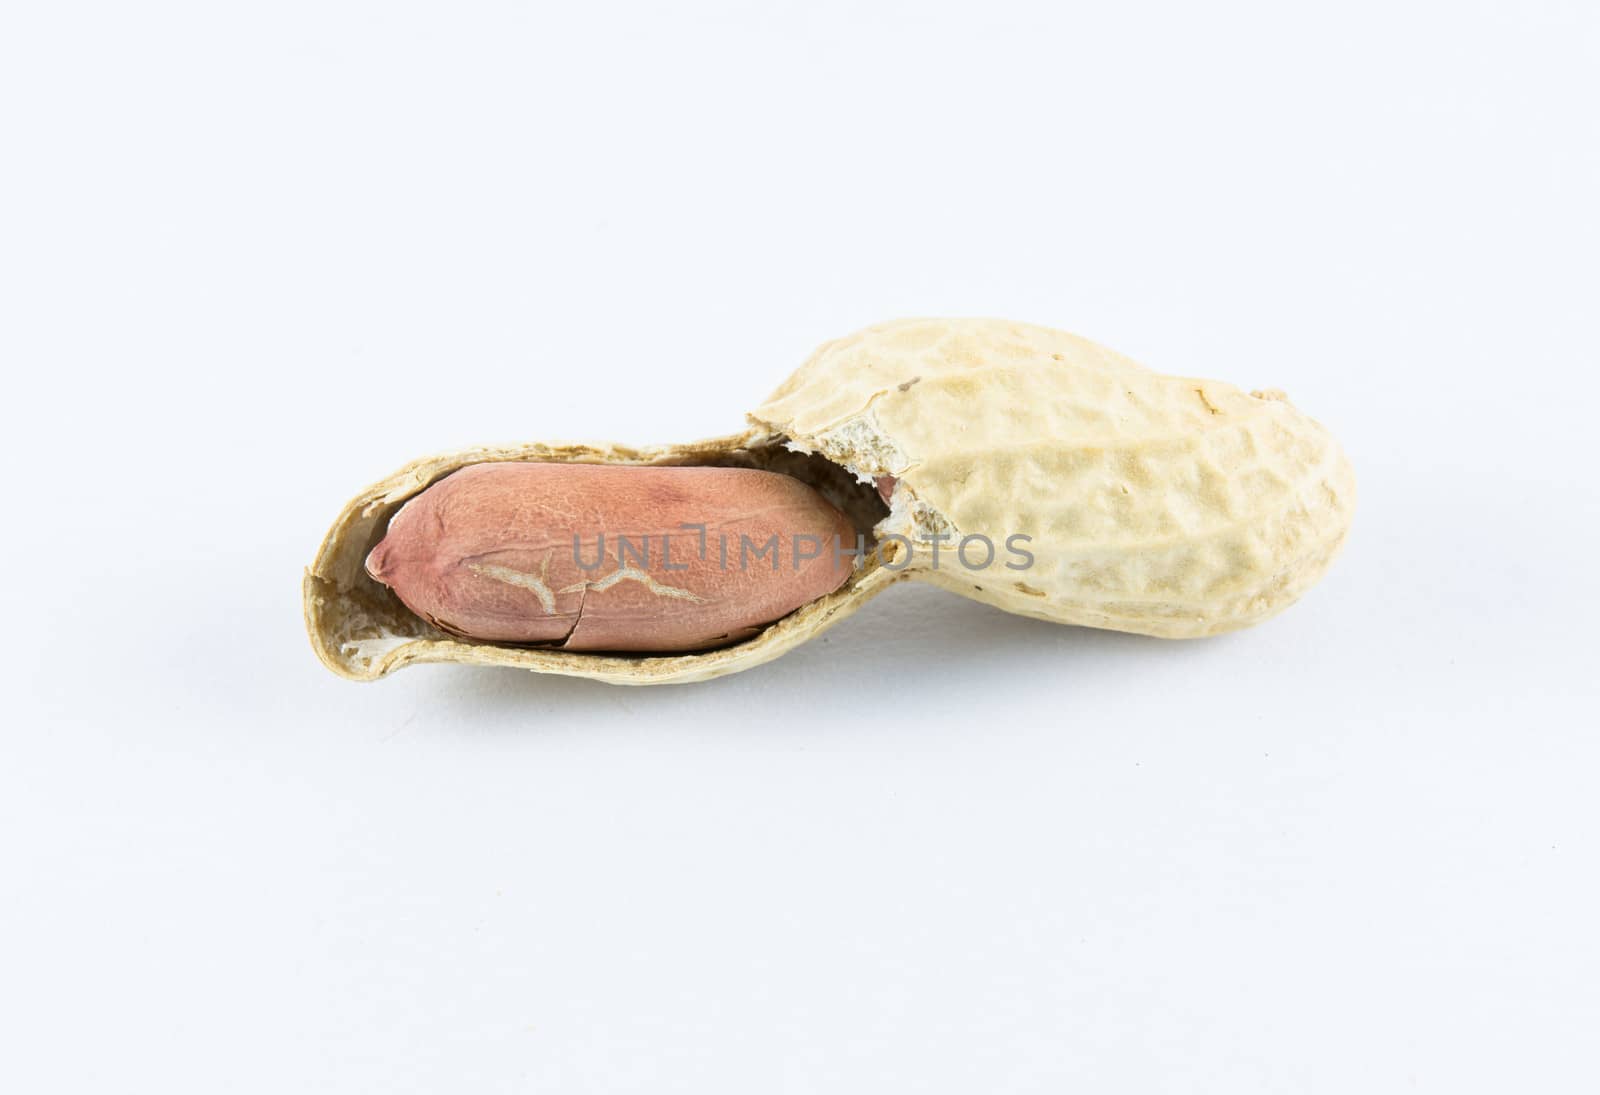 Baked Thai peanut or ground nut on white background